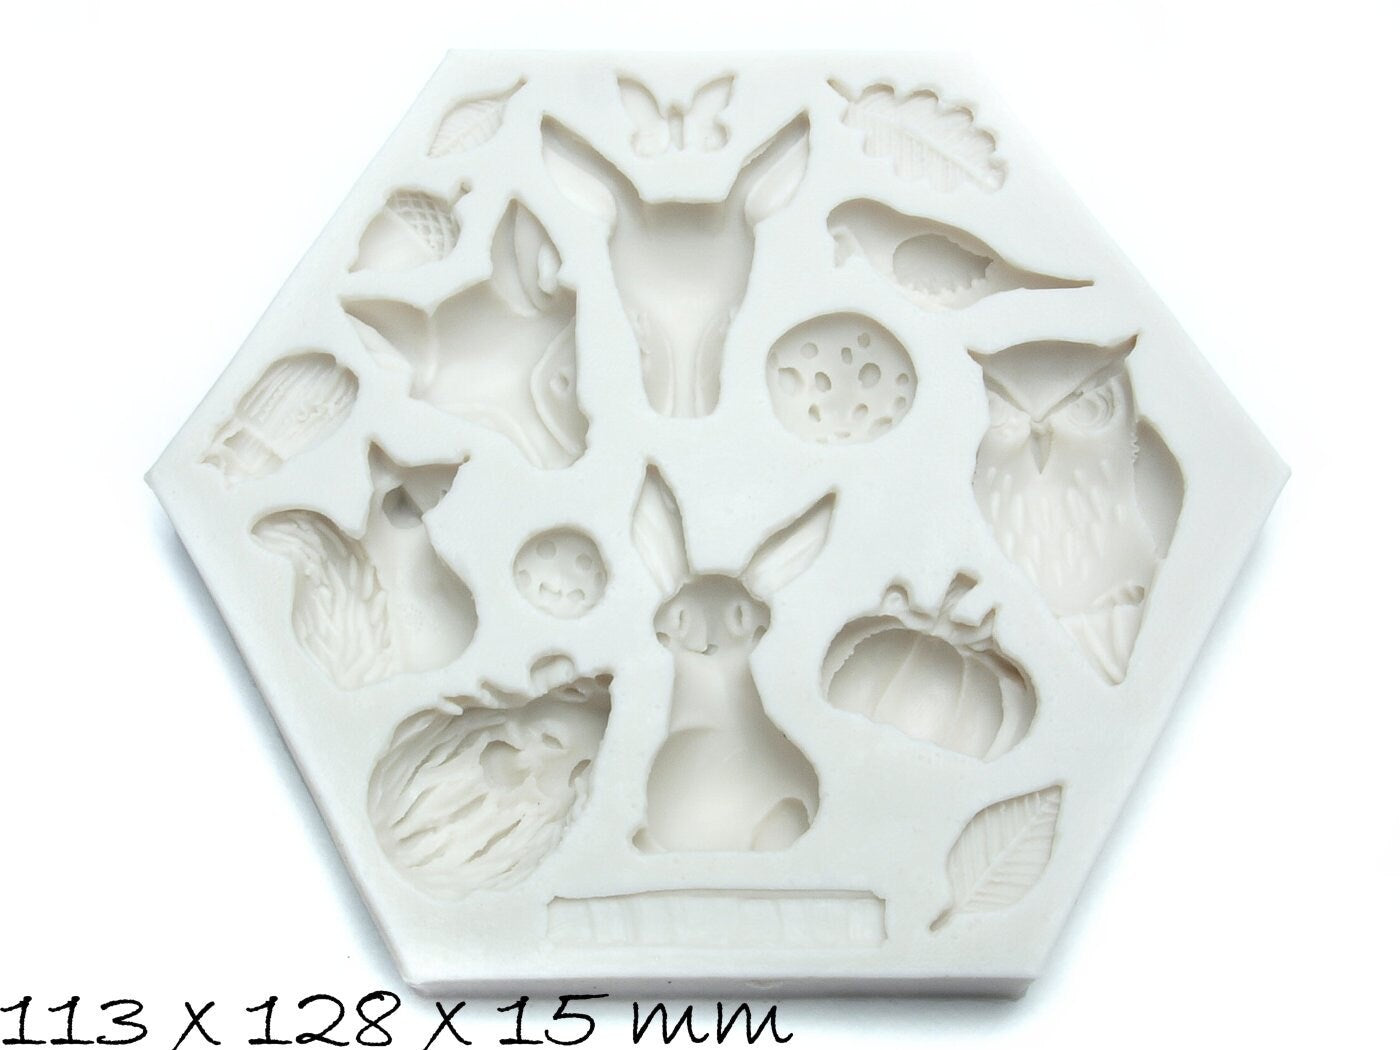 Silikonform Mold Mix Form Giessform, Tiere des Waldes, 113 x 128 mm